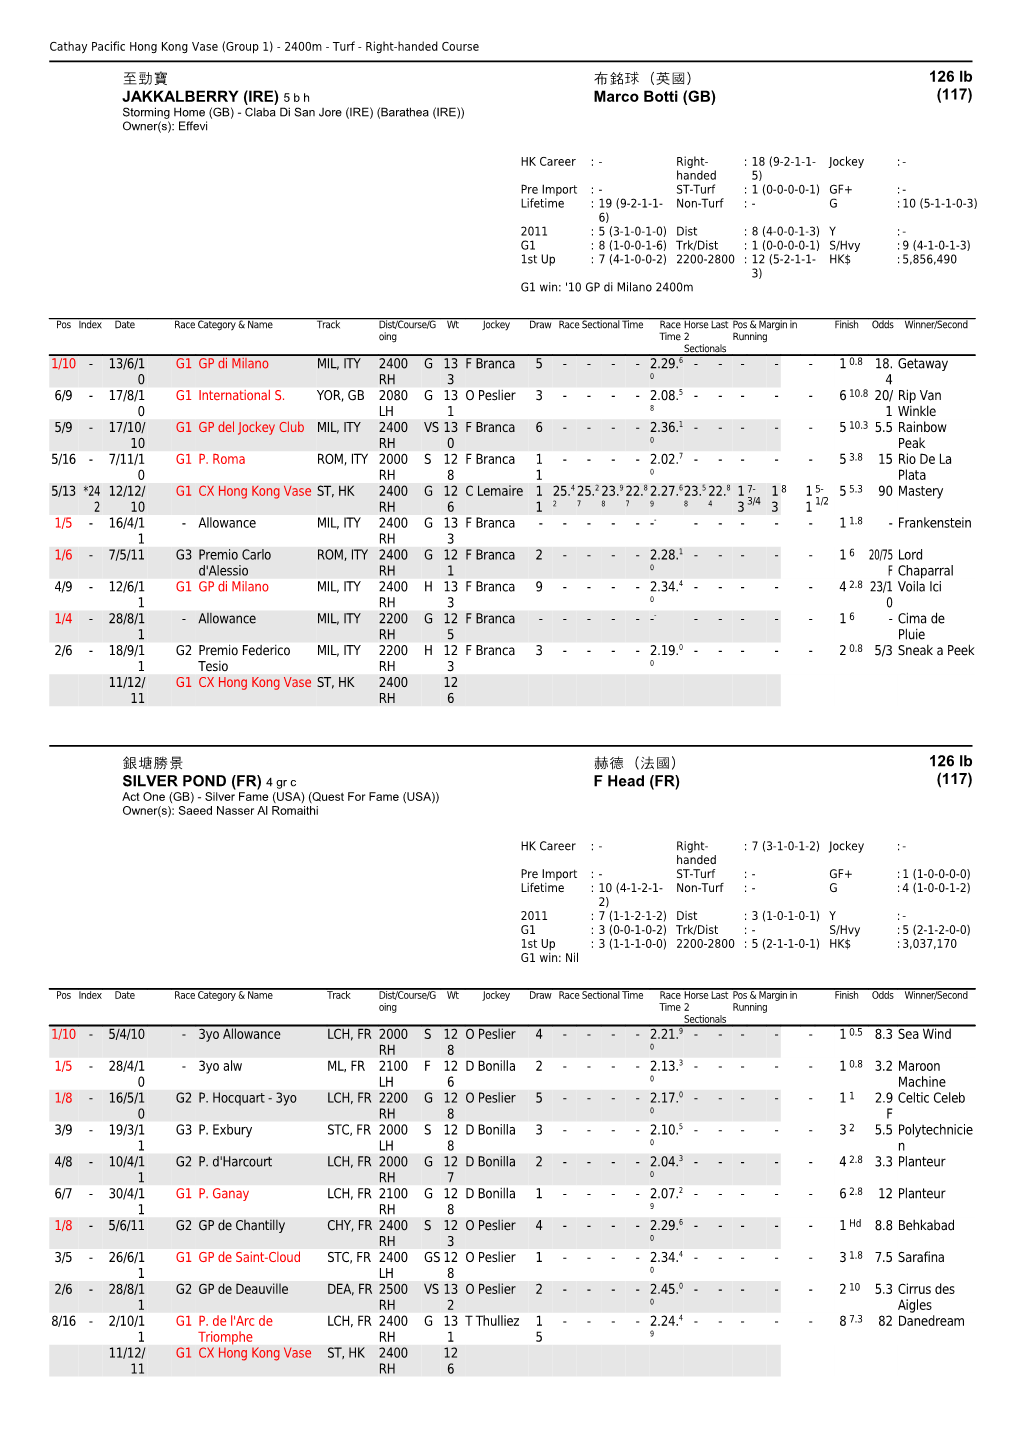 2011 Cathay Pacific Hong Kong International Races Selected Runners - Performance & Analysis